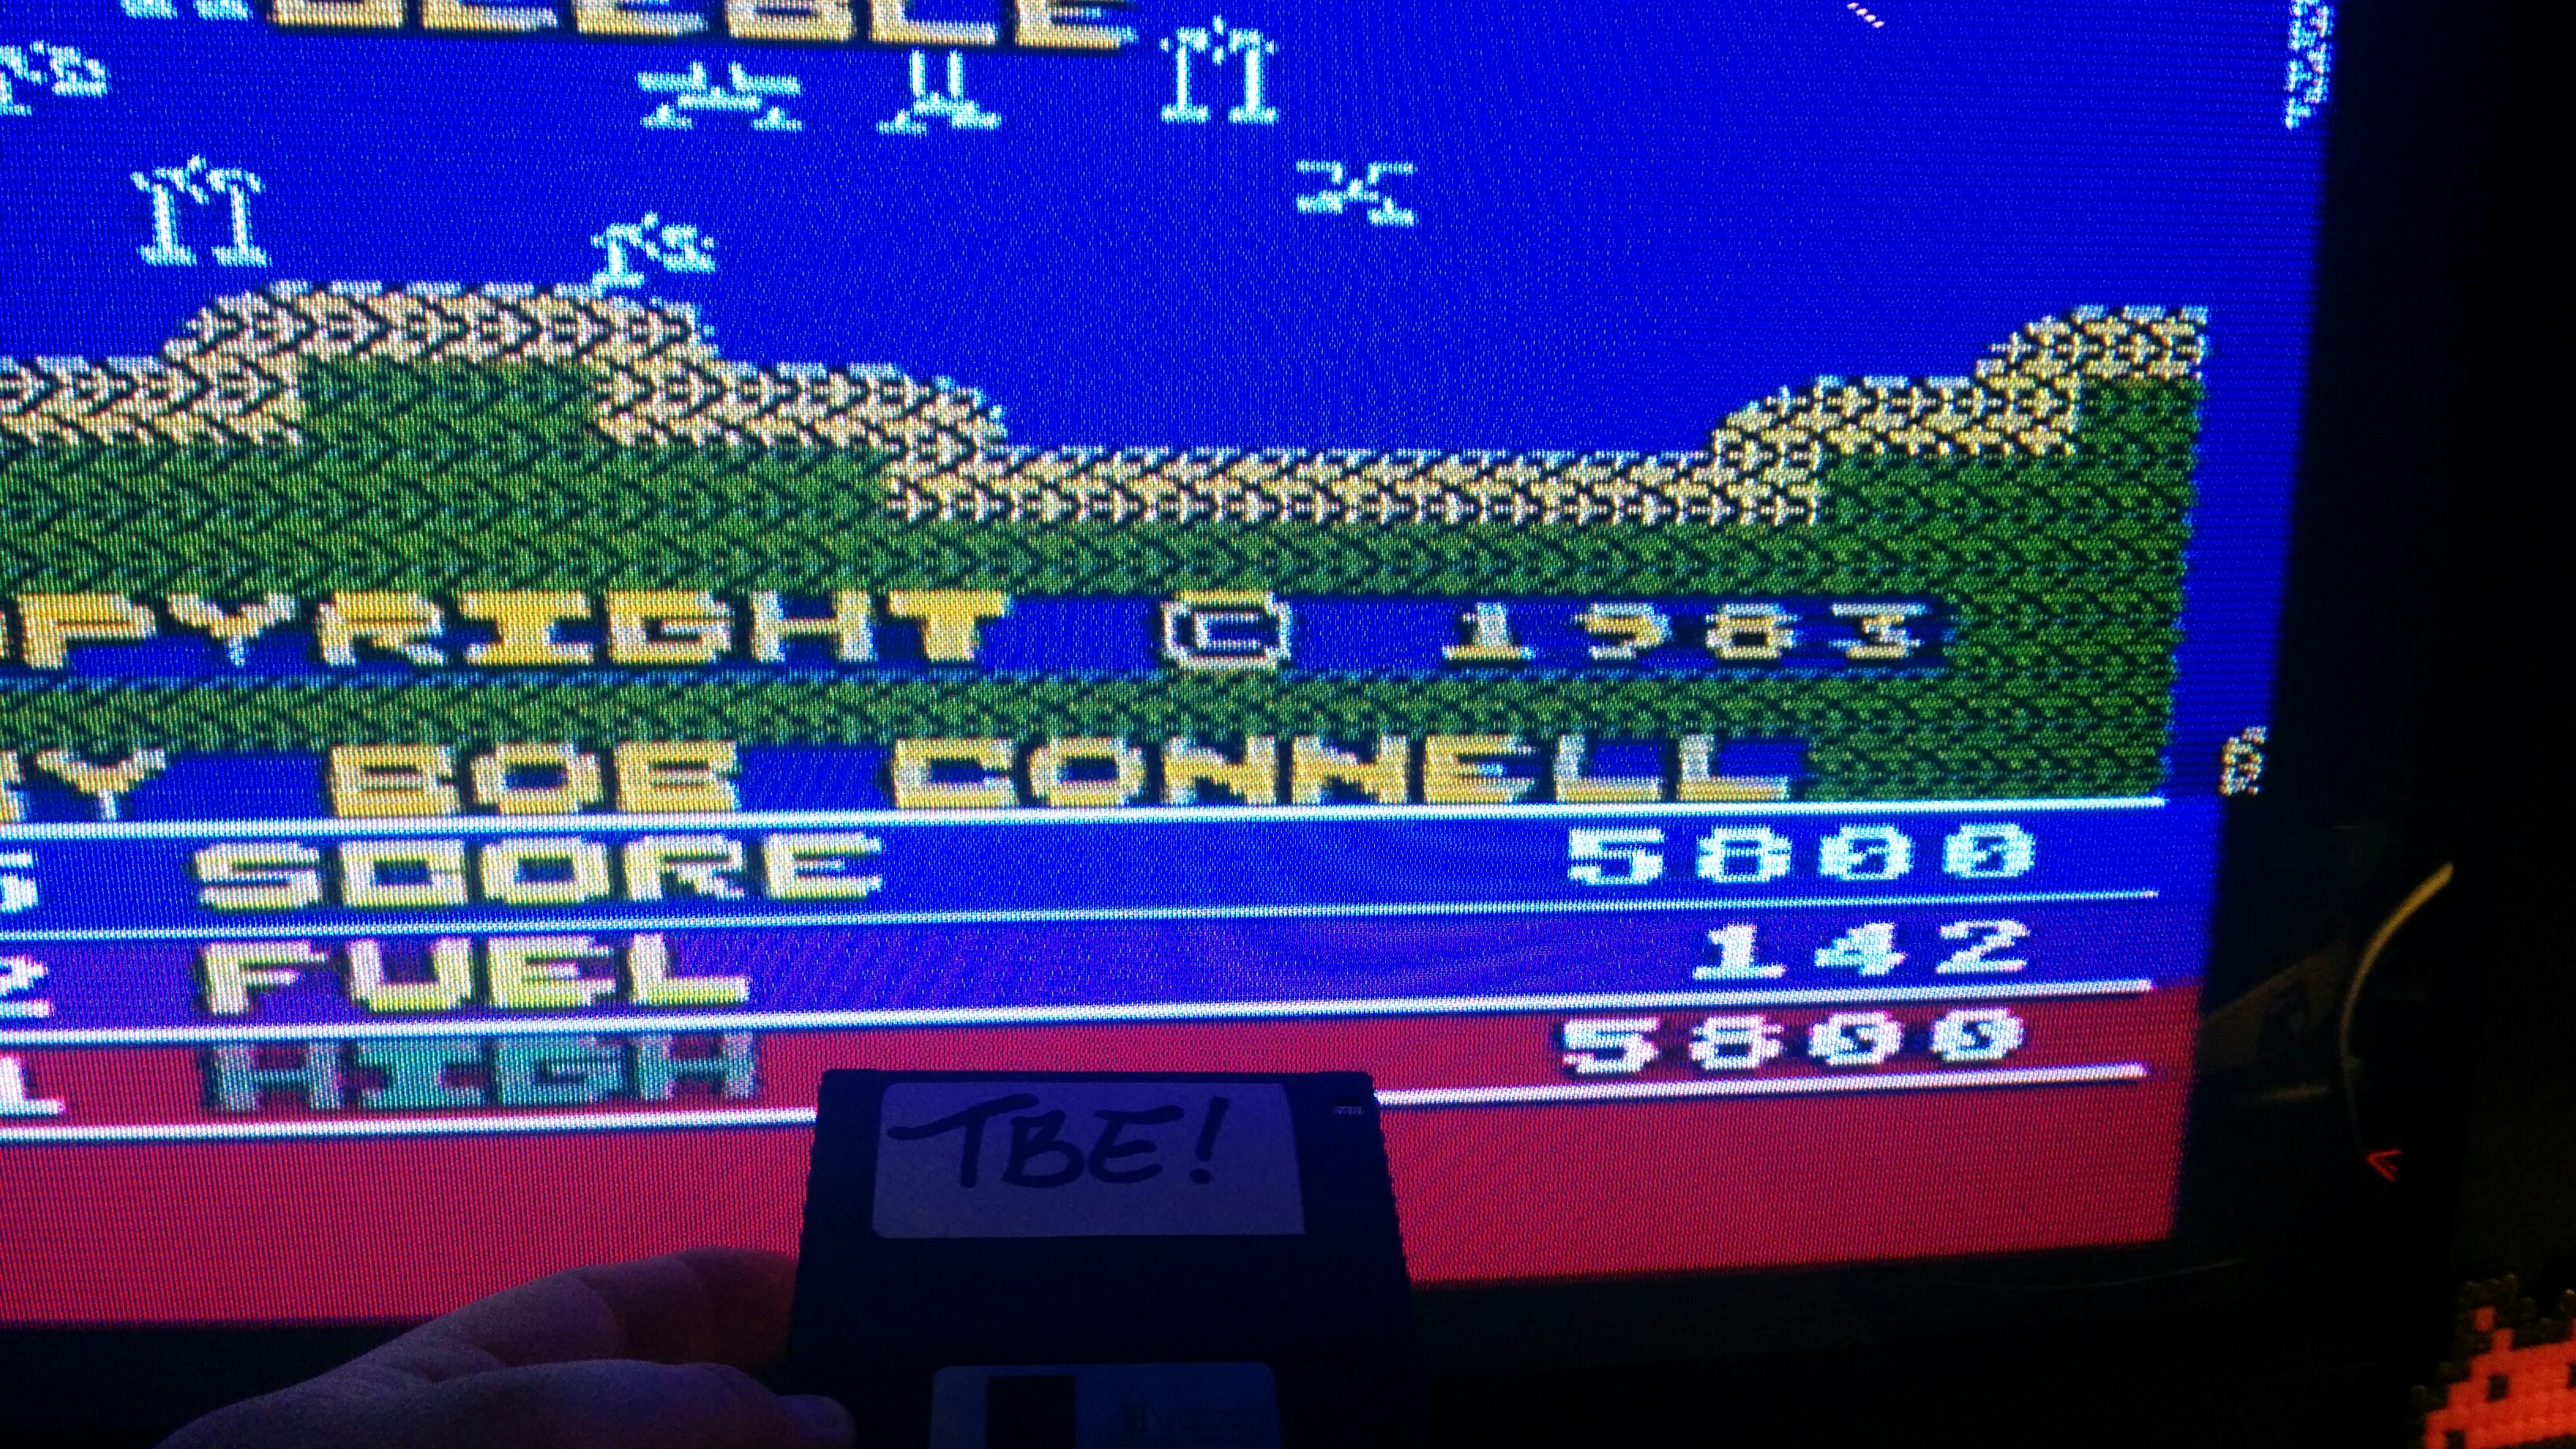 Sixx: Captain Beeble (Atari 400/800/XL/XE Emulated) 5,800 points on 2014-11-11 15:01:49